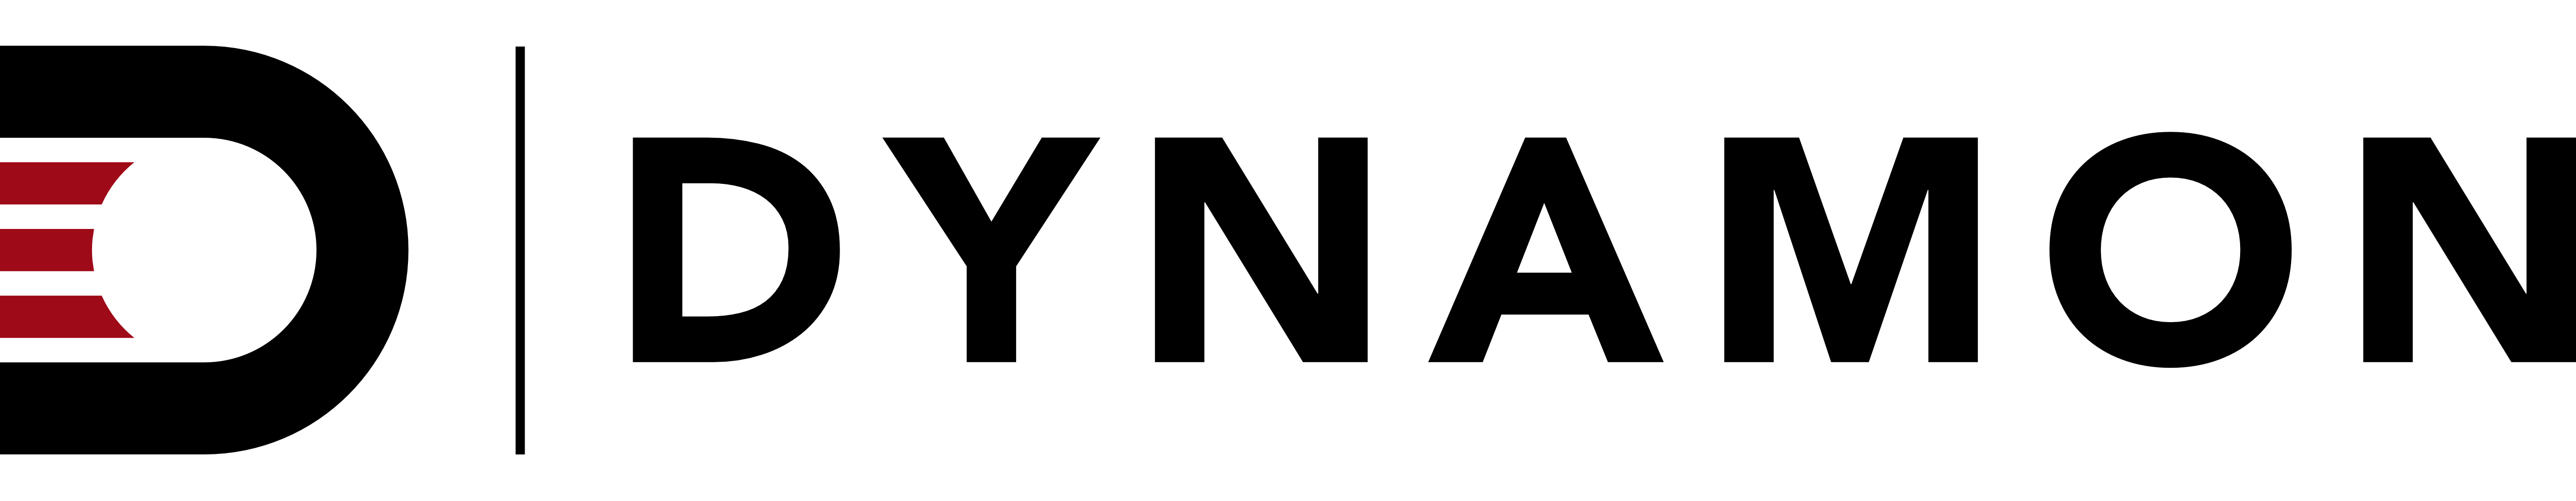 Organisation Logo - Dynamon Ltd